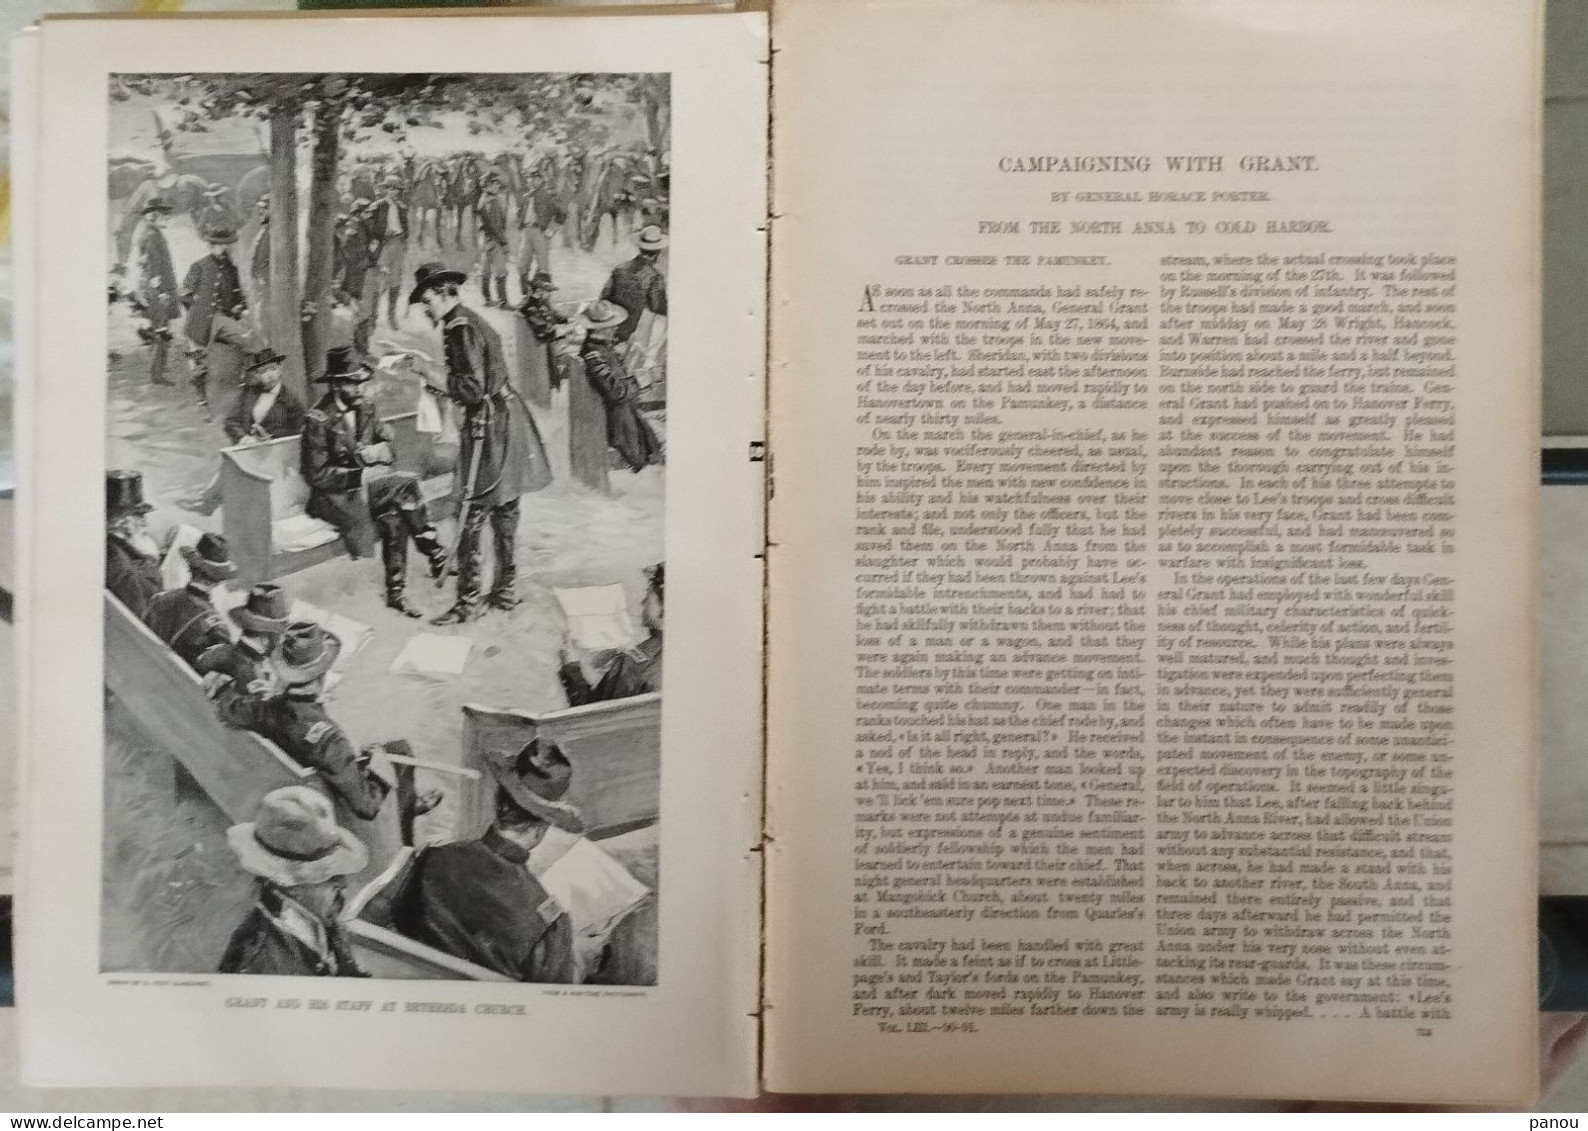 THE CENTURY MAGAZINE, 1897. NATION'S LIBRARY. CONGRESSIONAL LIBRARY. GRANT. INAUGURATION. NELSON AT TRAFALGARN